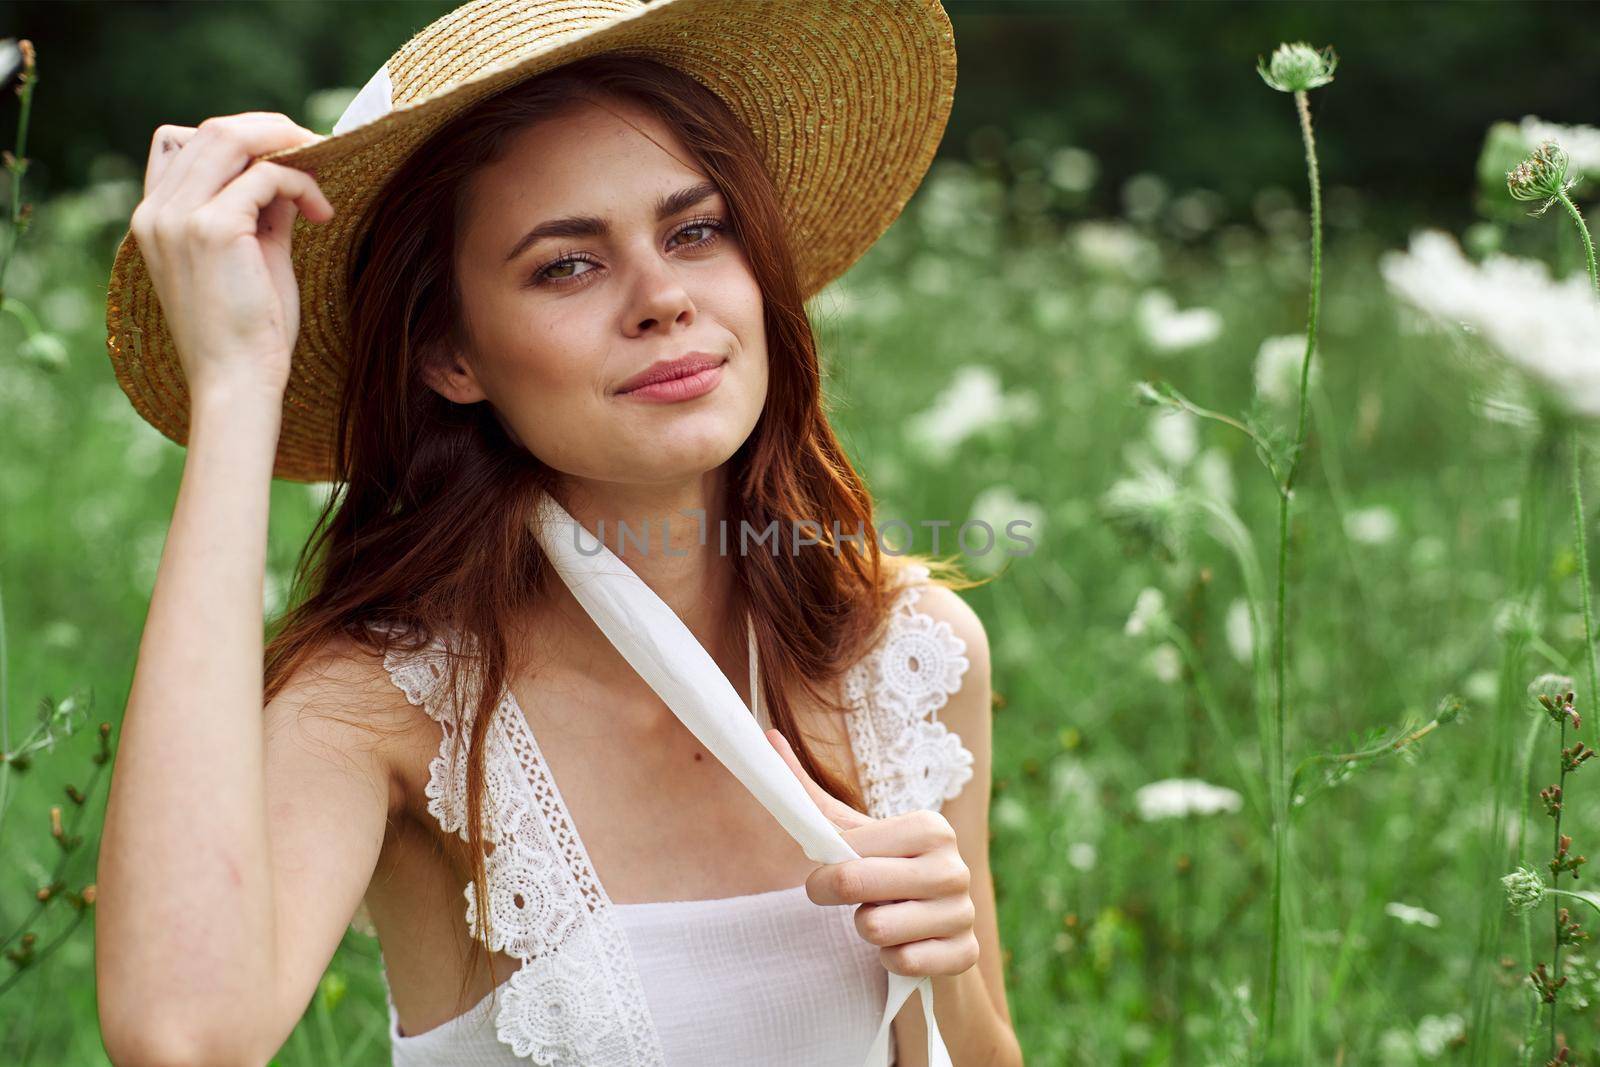 Cheerful woman nature flowers posing freedom fashion. High quality photo